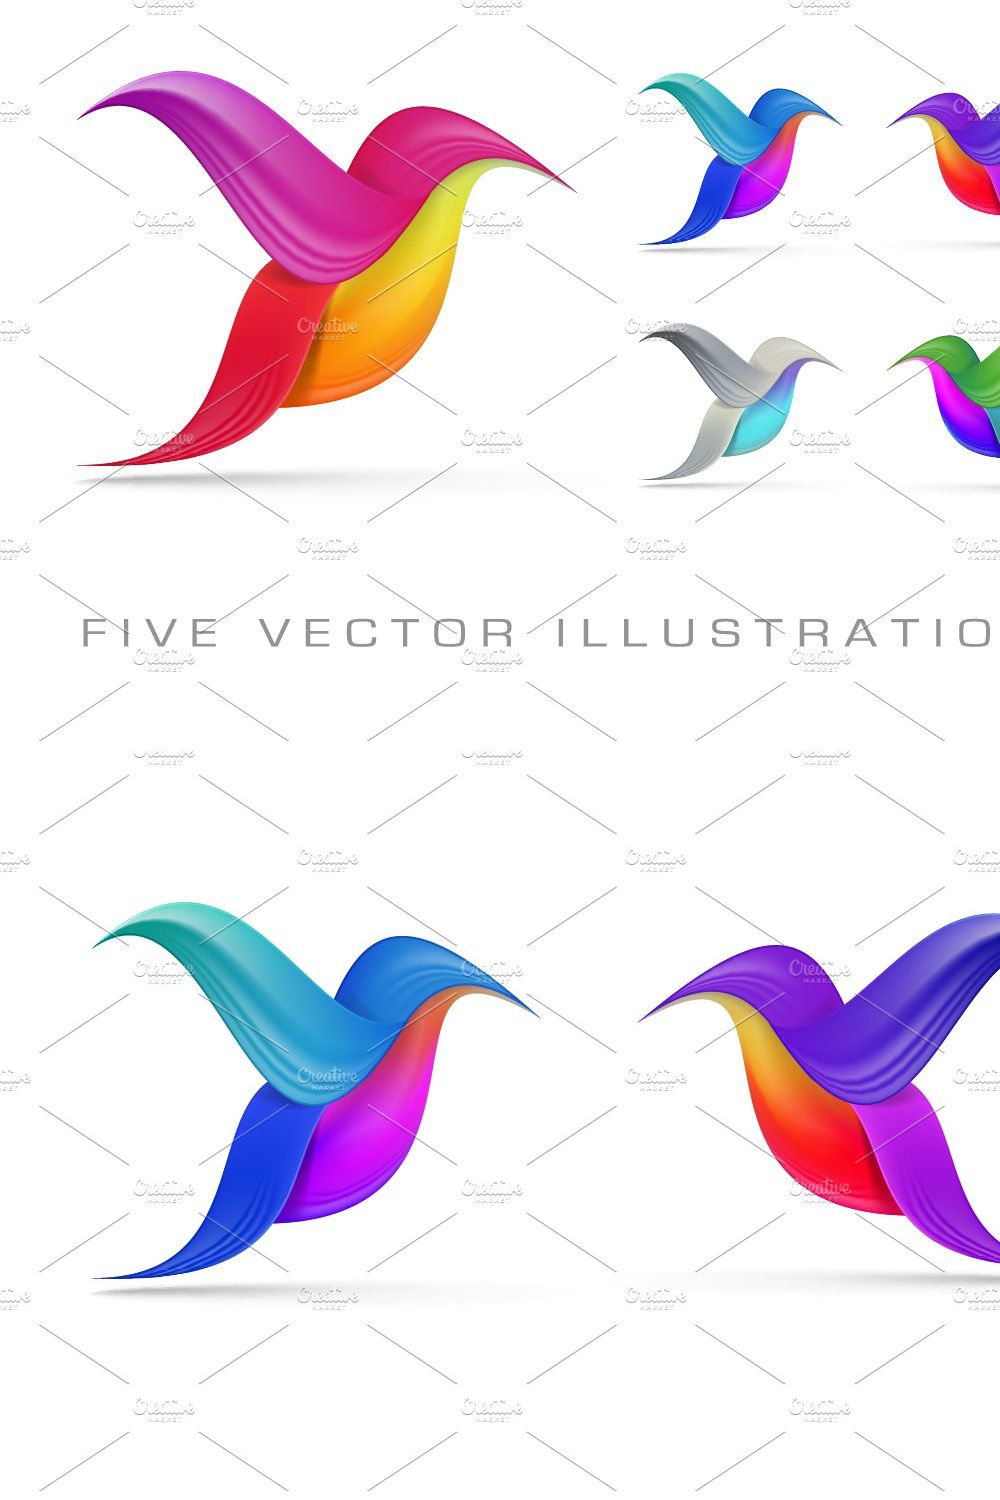 Hummingbird abstract symbols pinterest preview image.